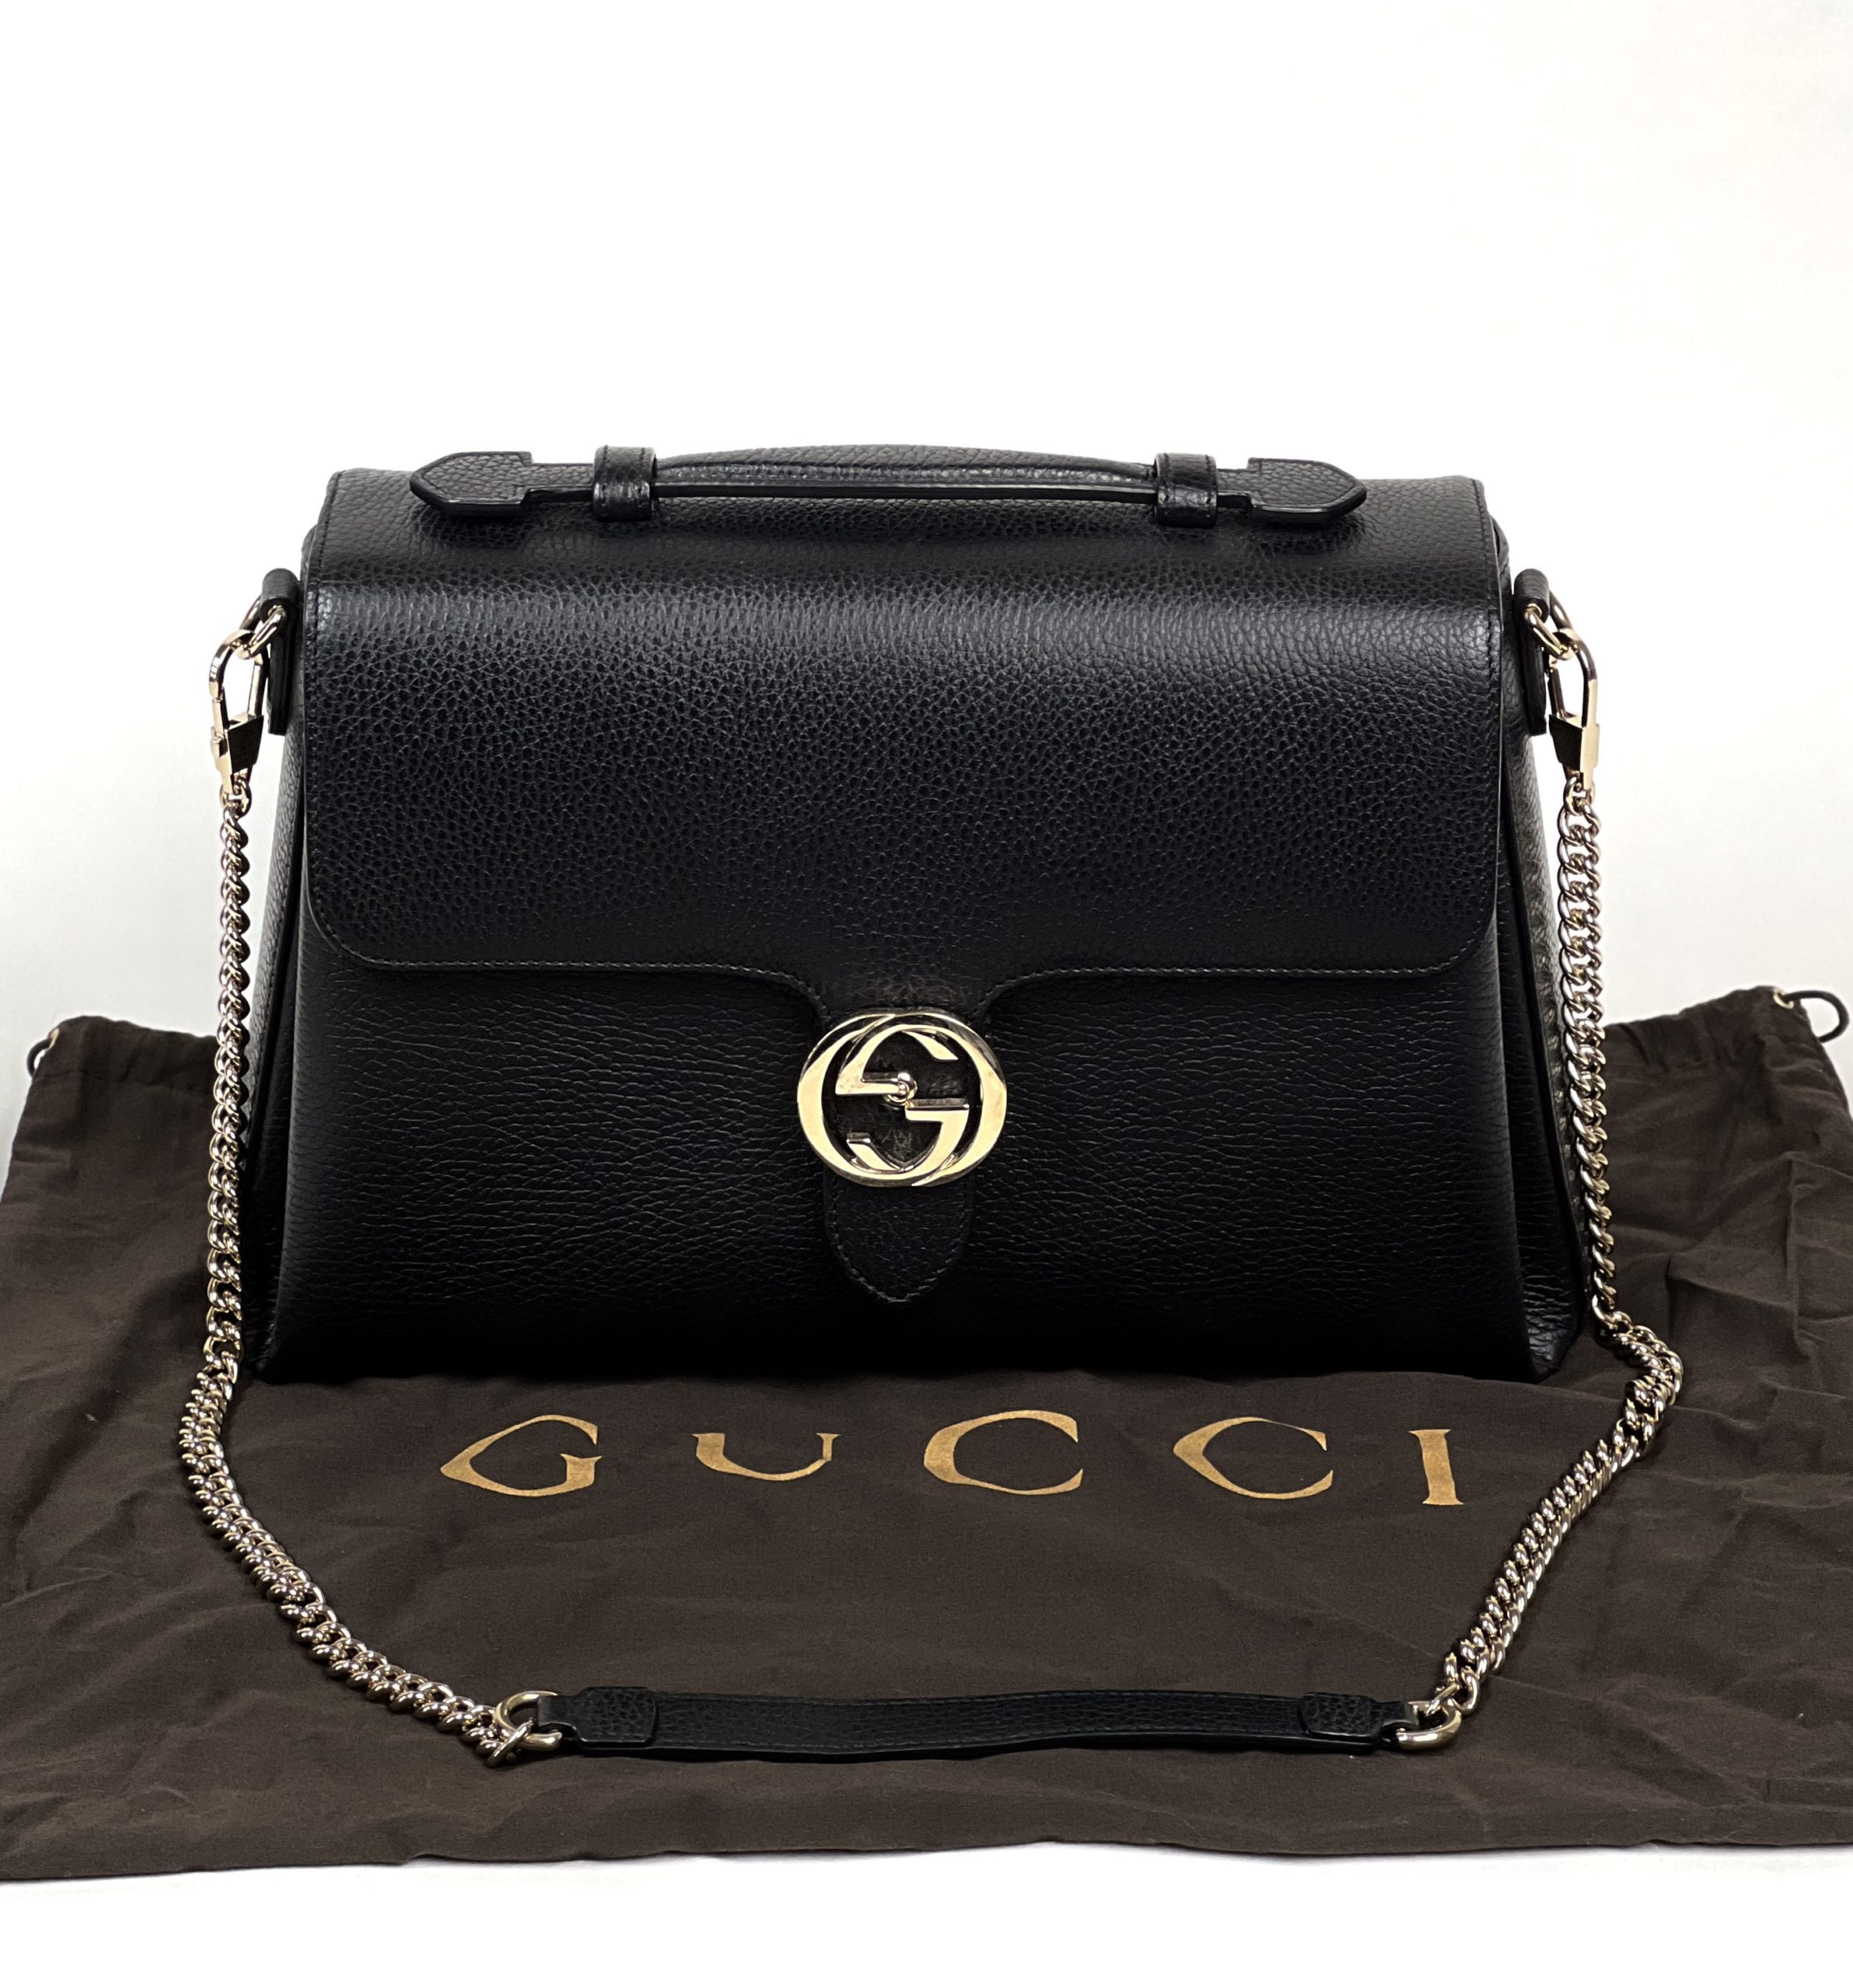 Gucci - GG Interlocking Leather Large Chain Top Handle Bag Black